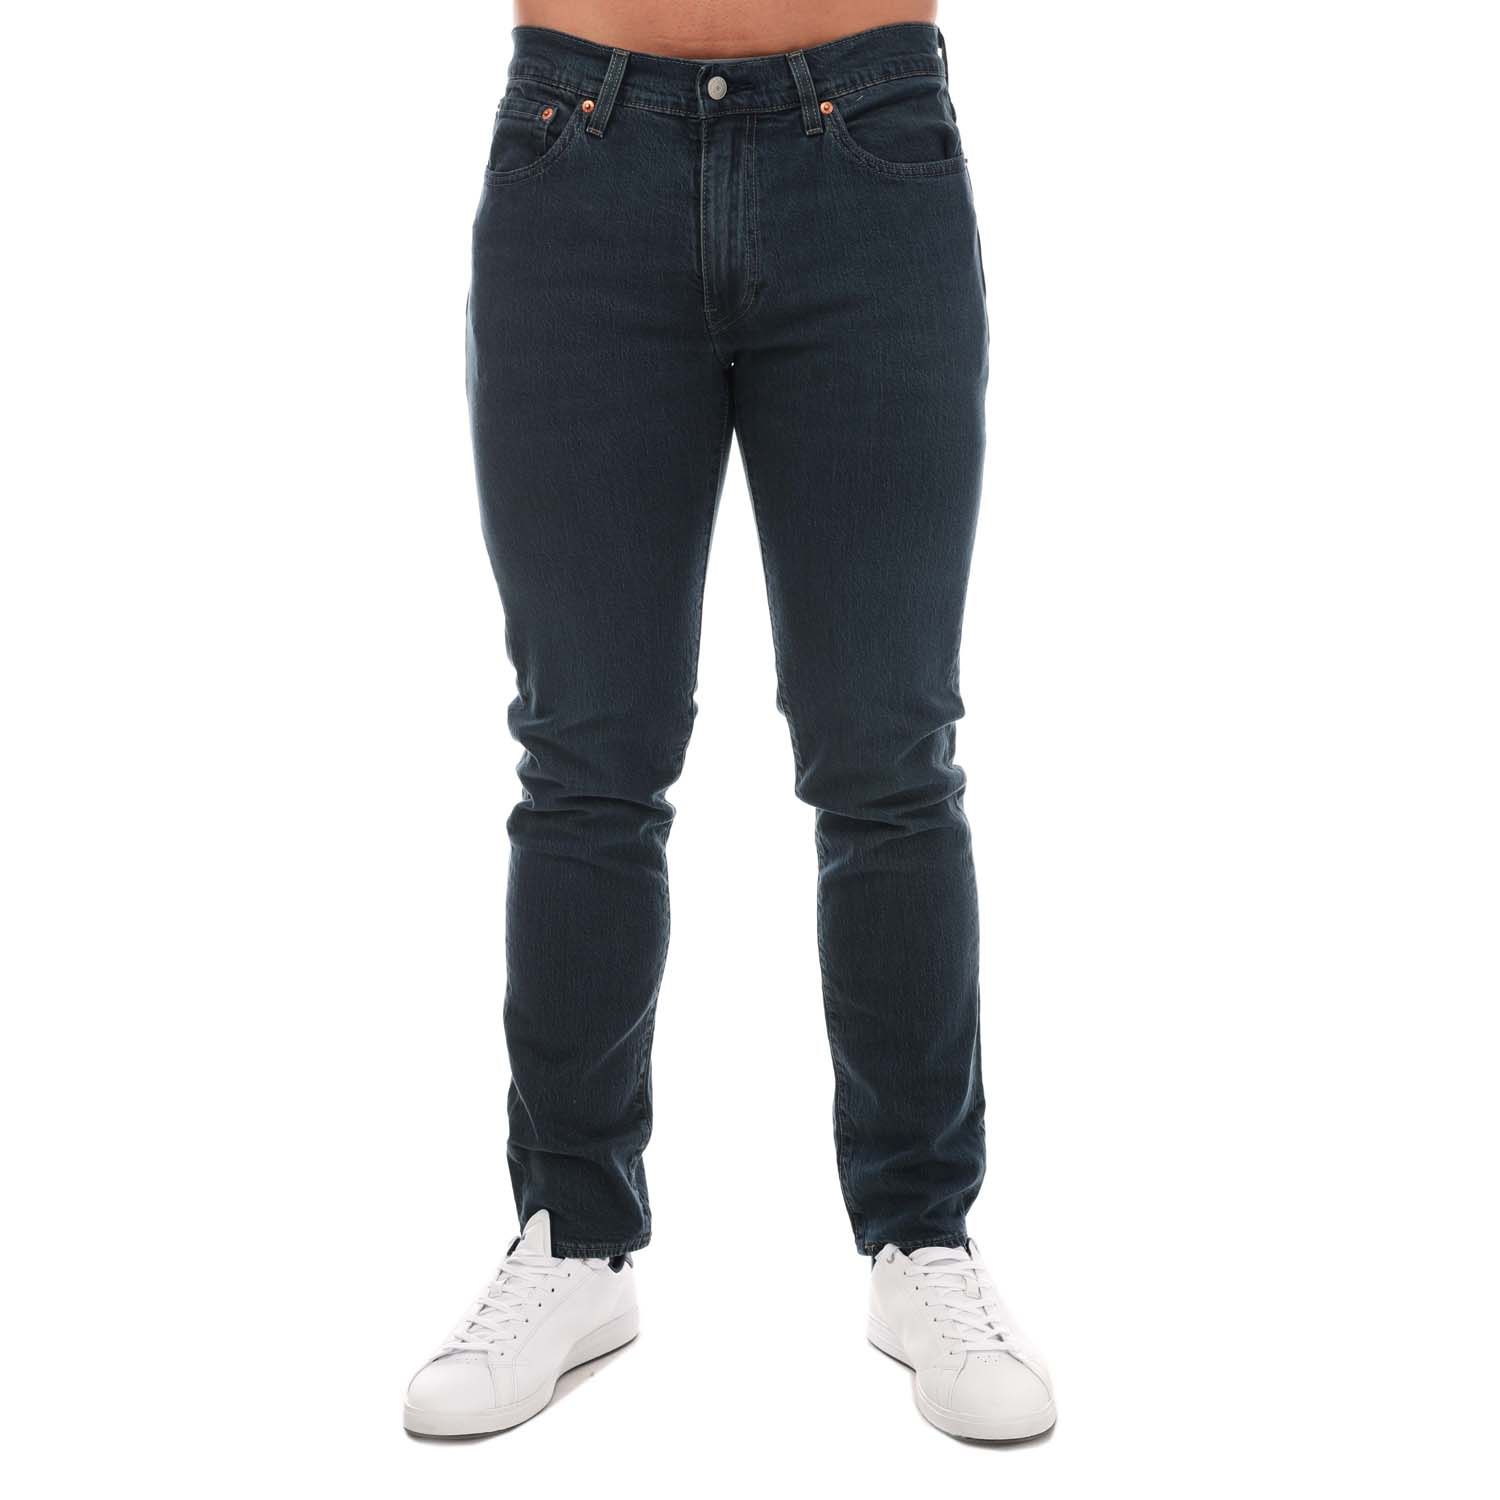 Mens 511 Laurelhurst Seadip Slim Fit jeans